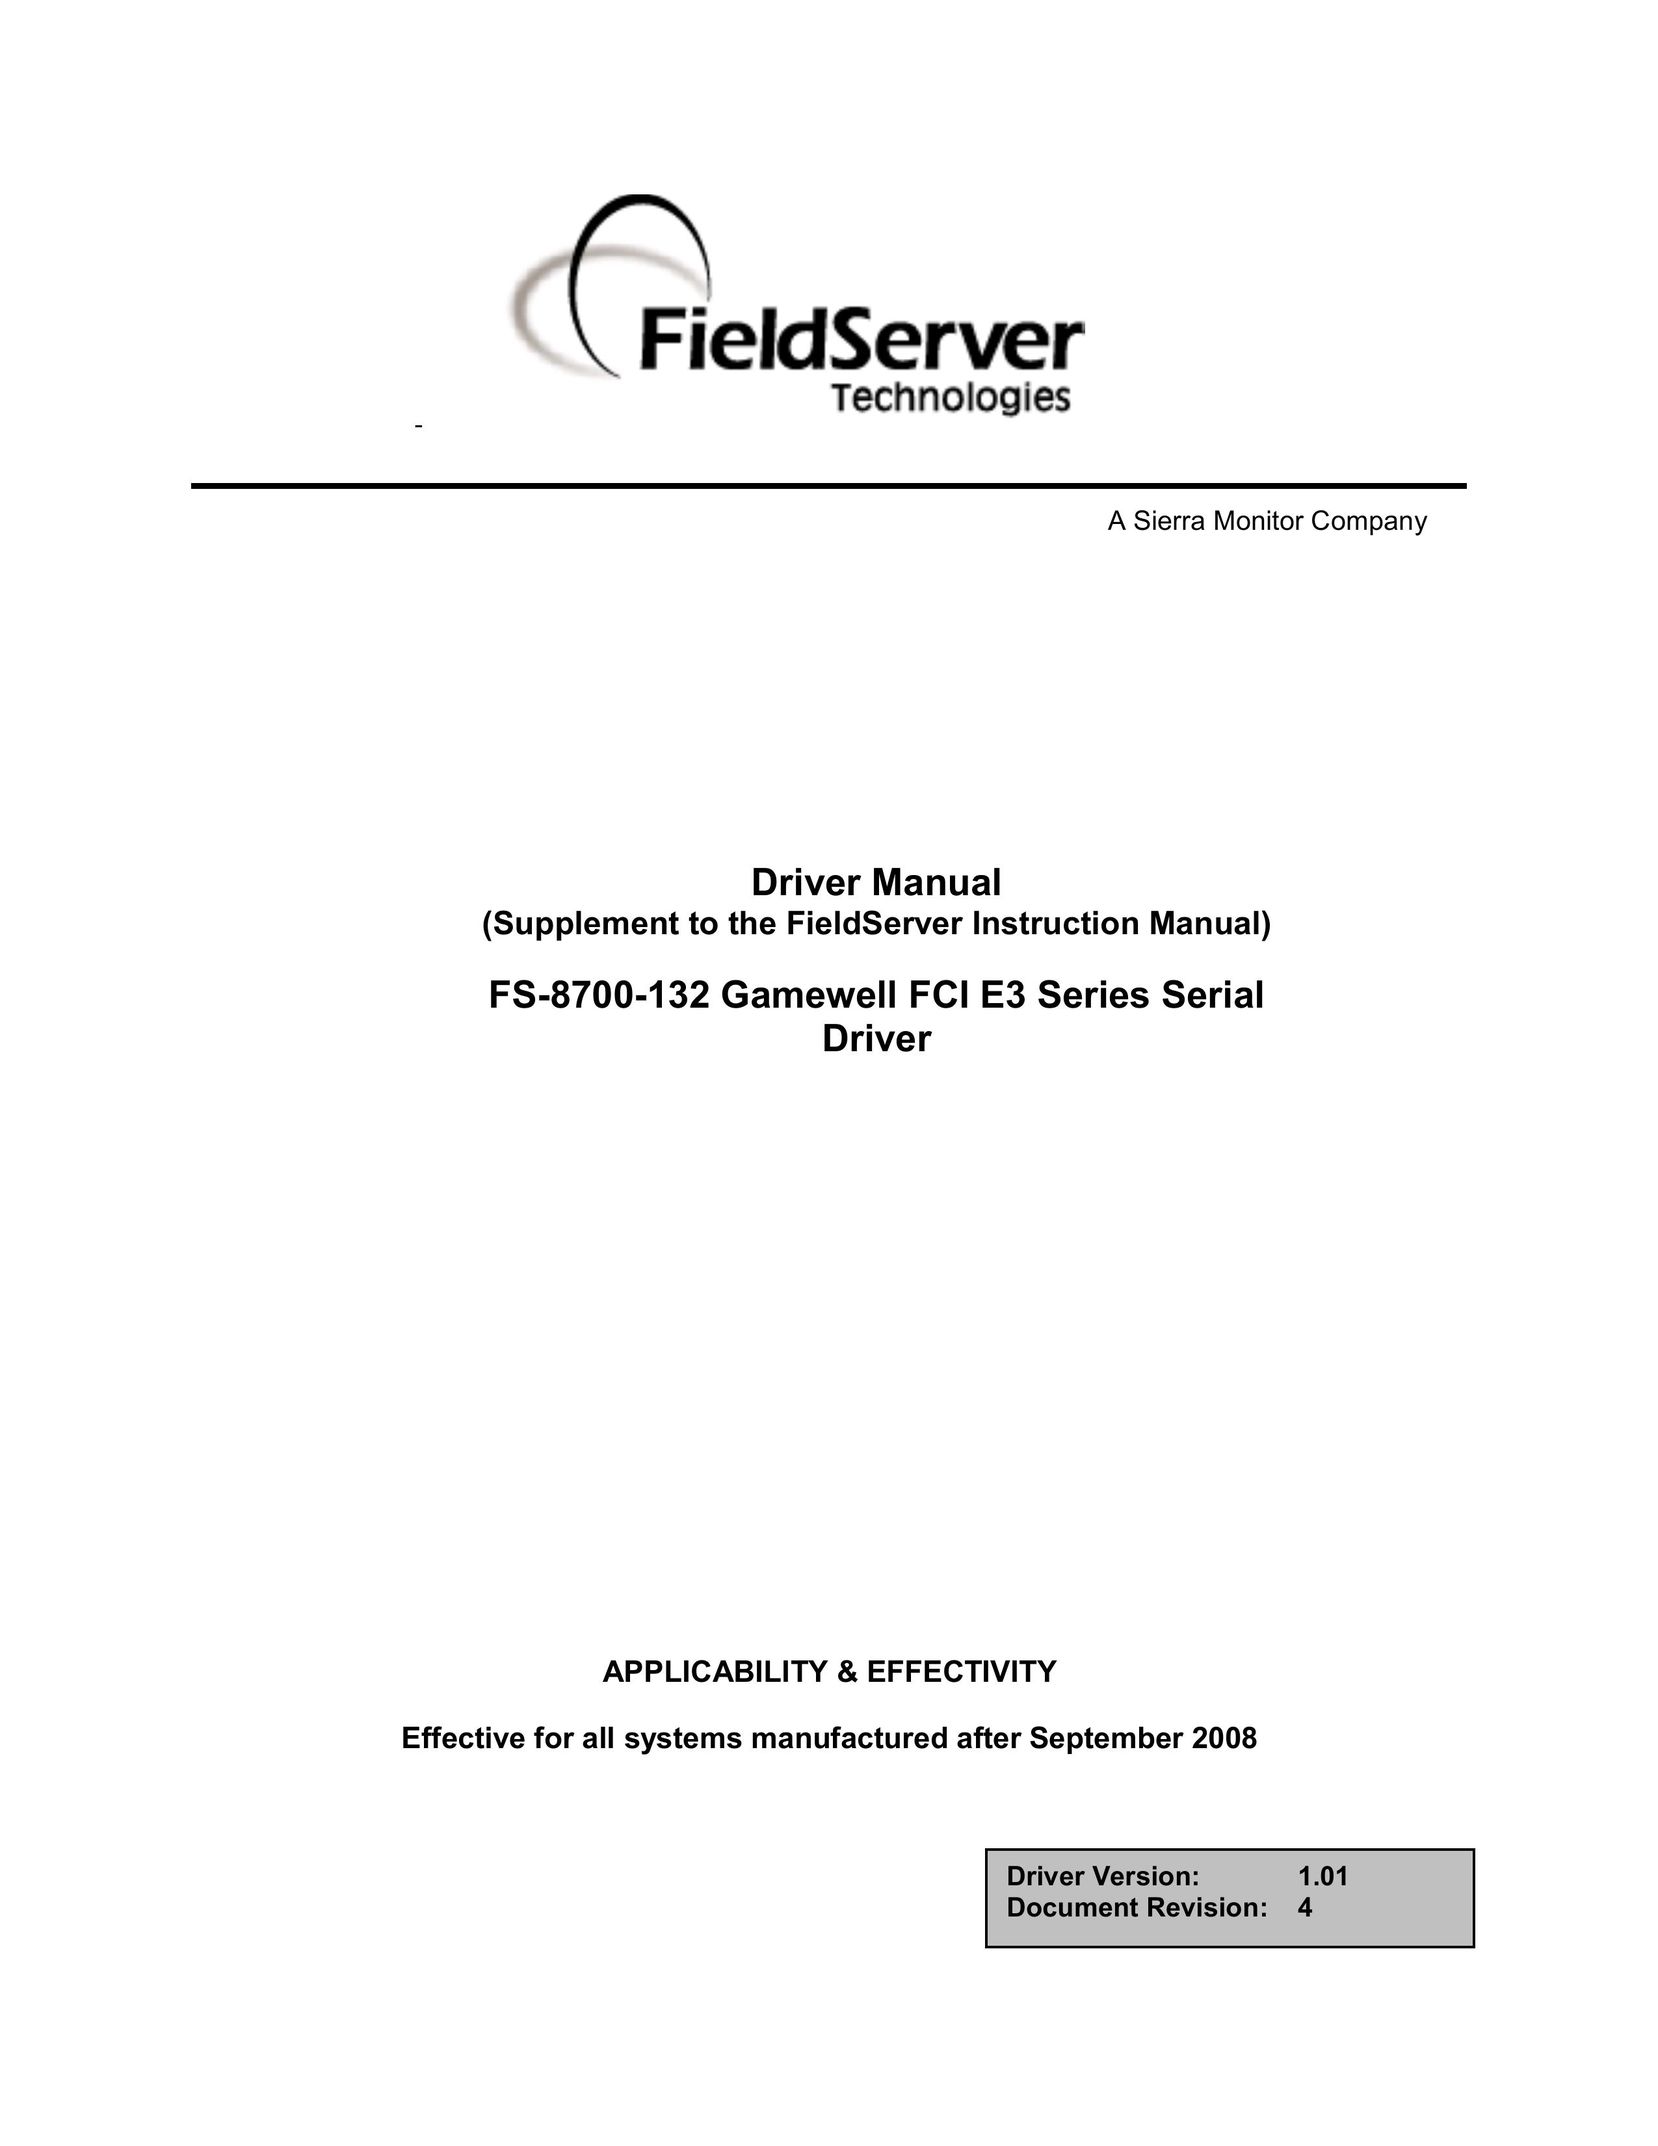 FieldServer FCI E3 Series Computer Drive User Manual